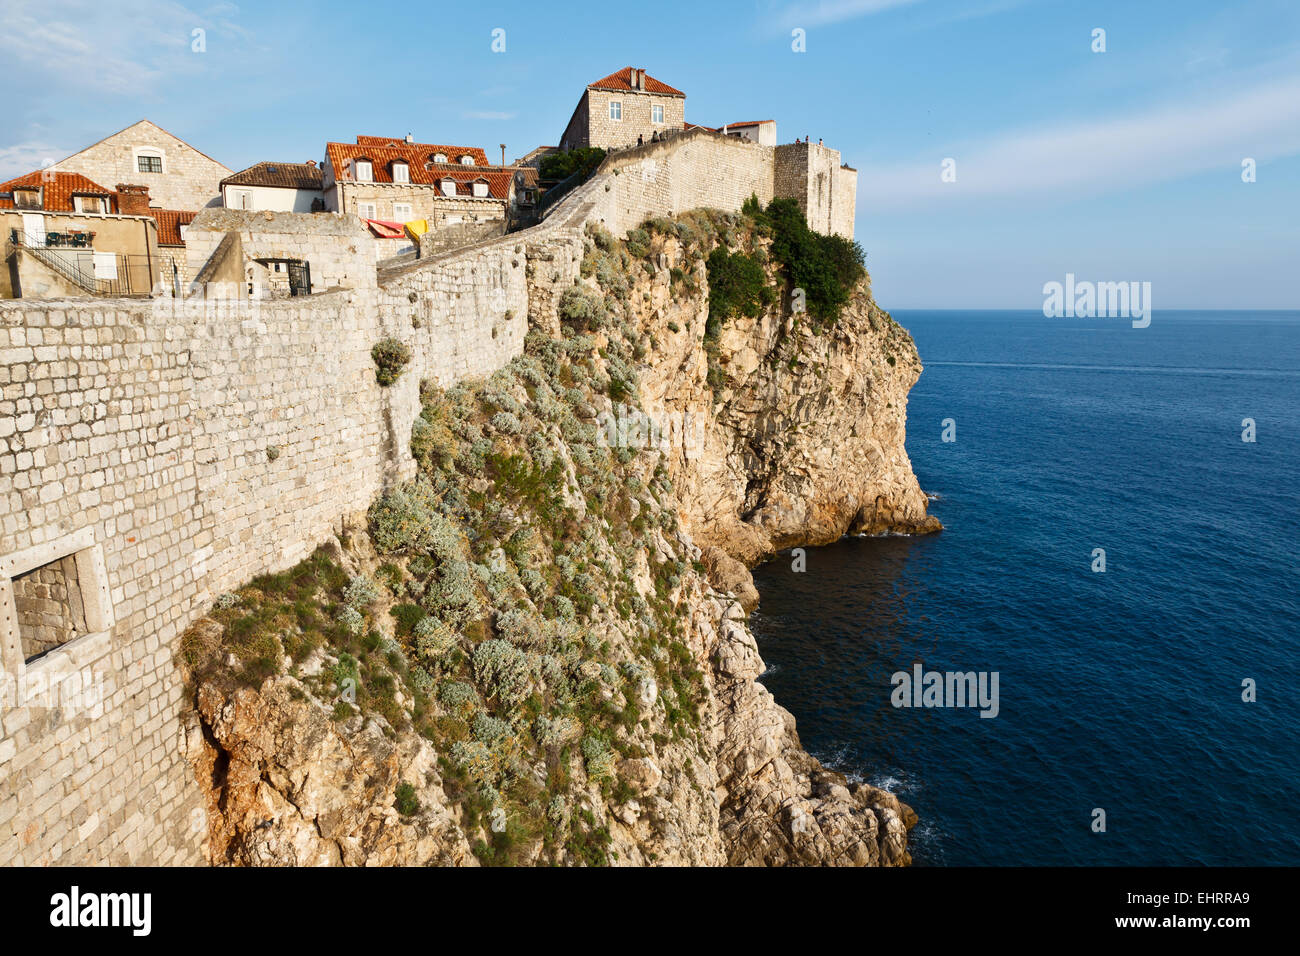 Amazing Dubrovnik Defensive Wall Built on Cliff, Croatia Stock Photo